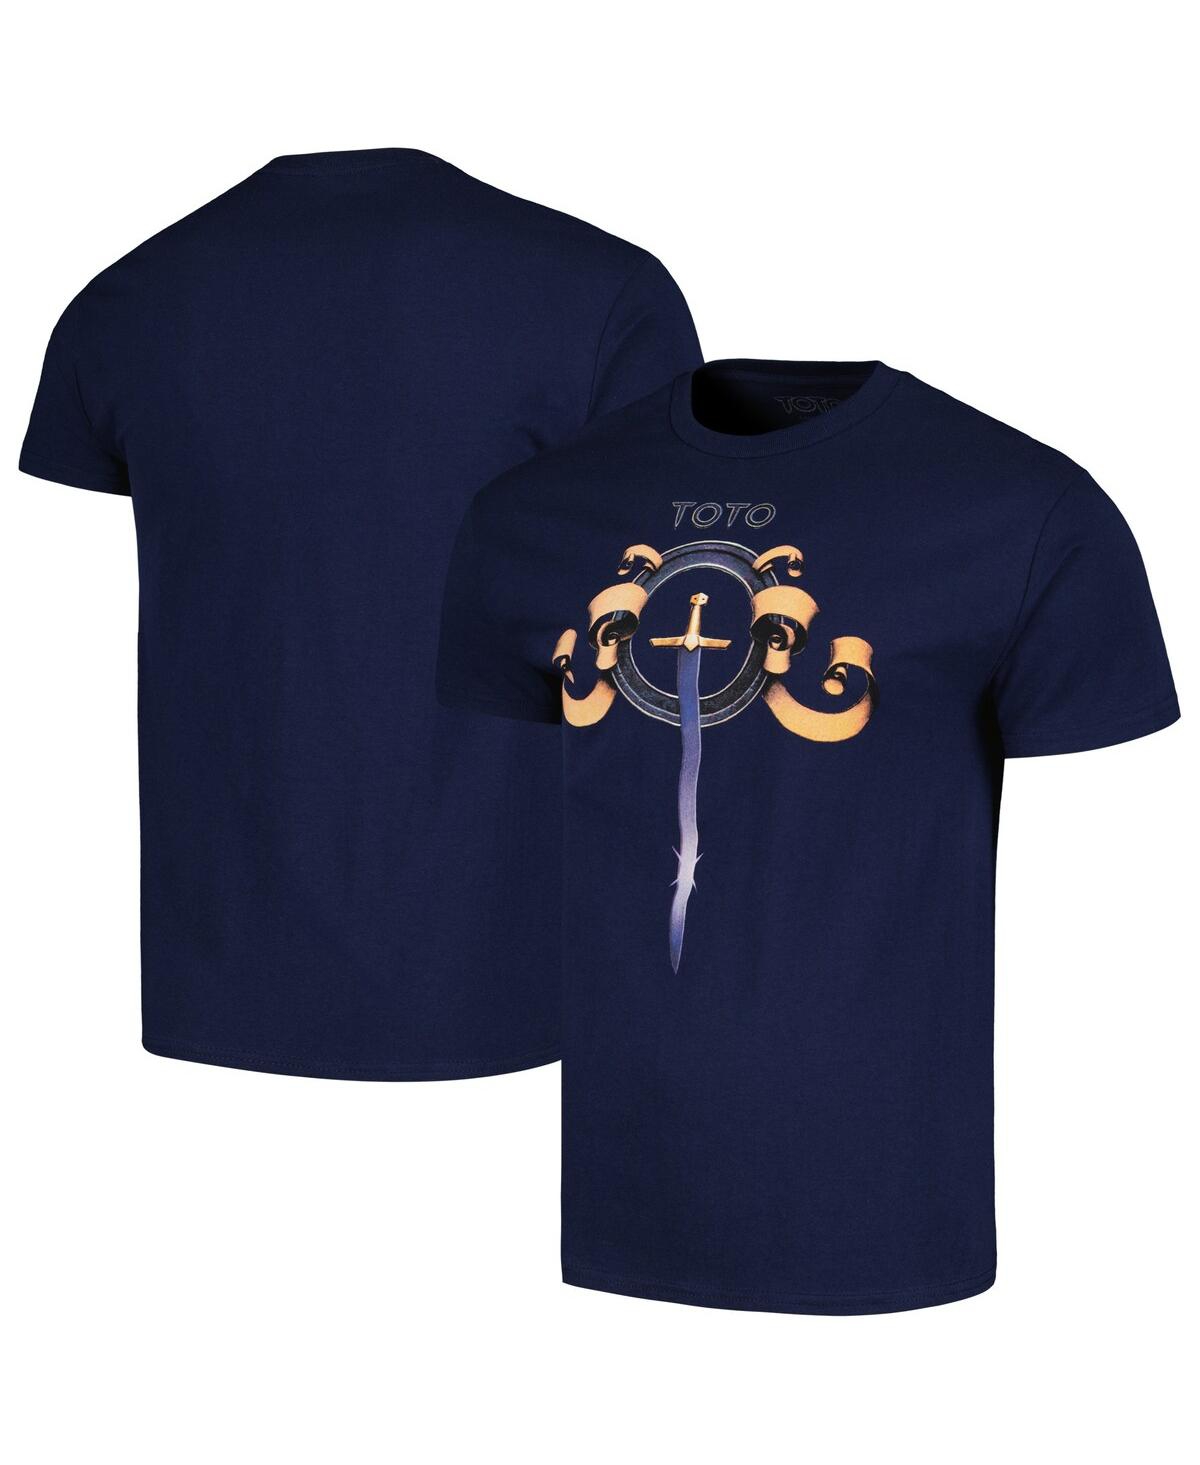 Manhead Merch Men's  Navy Toto Self Titled Sword Graphic T-shirt